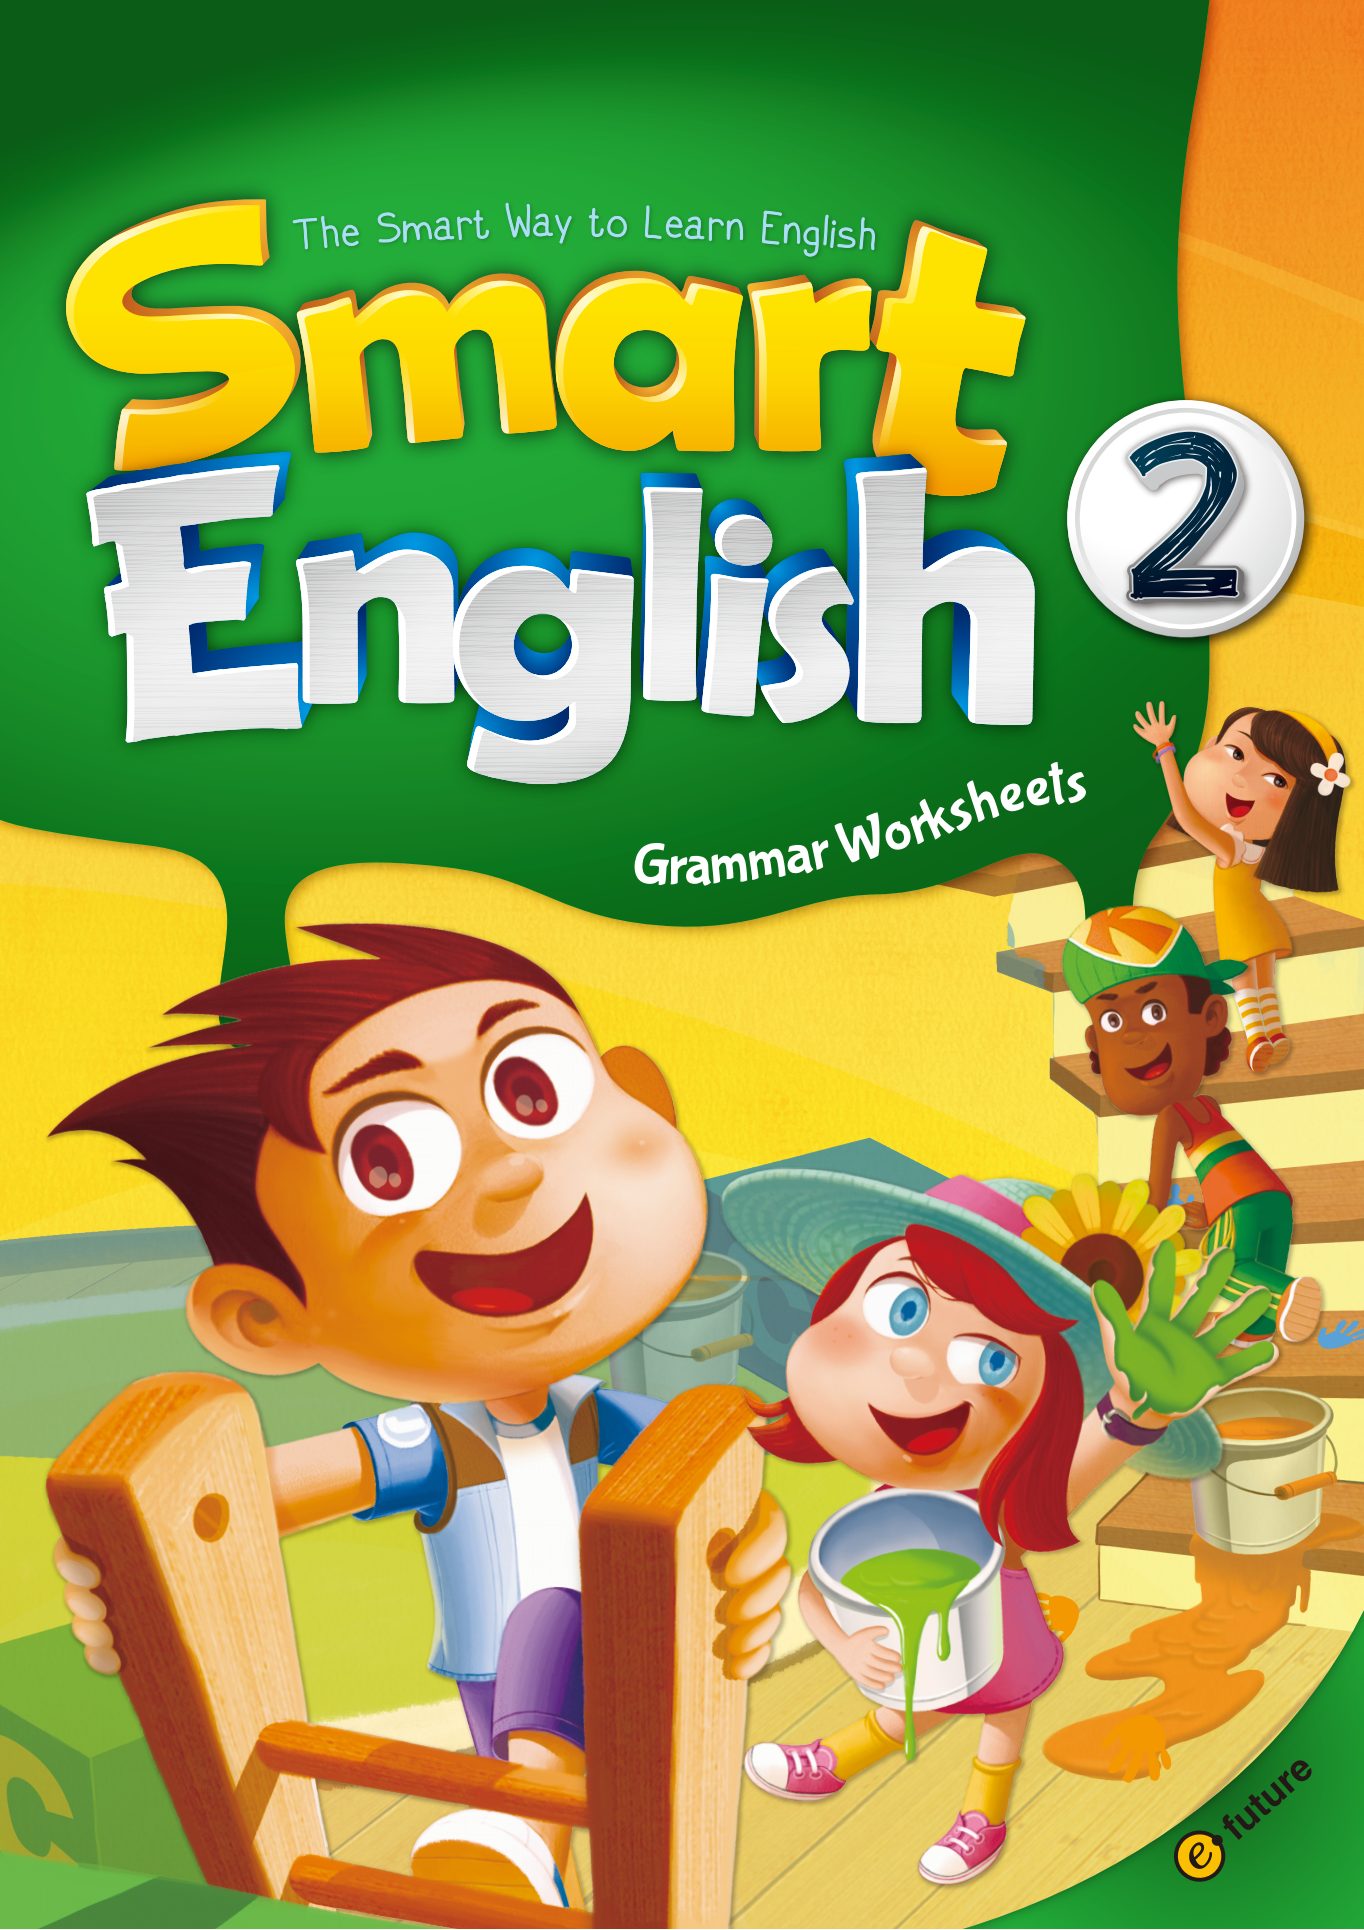 smart-english-grammar-worksheets-library-fimsschools